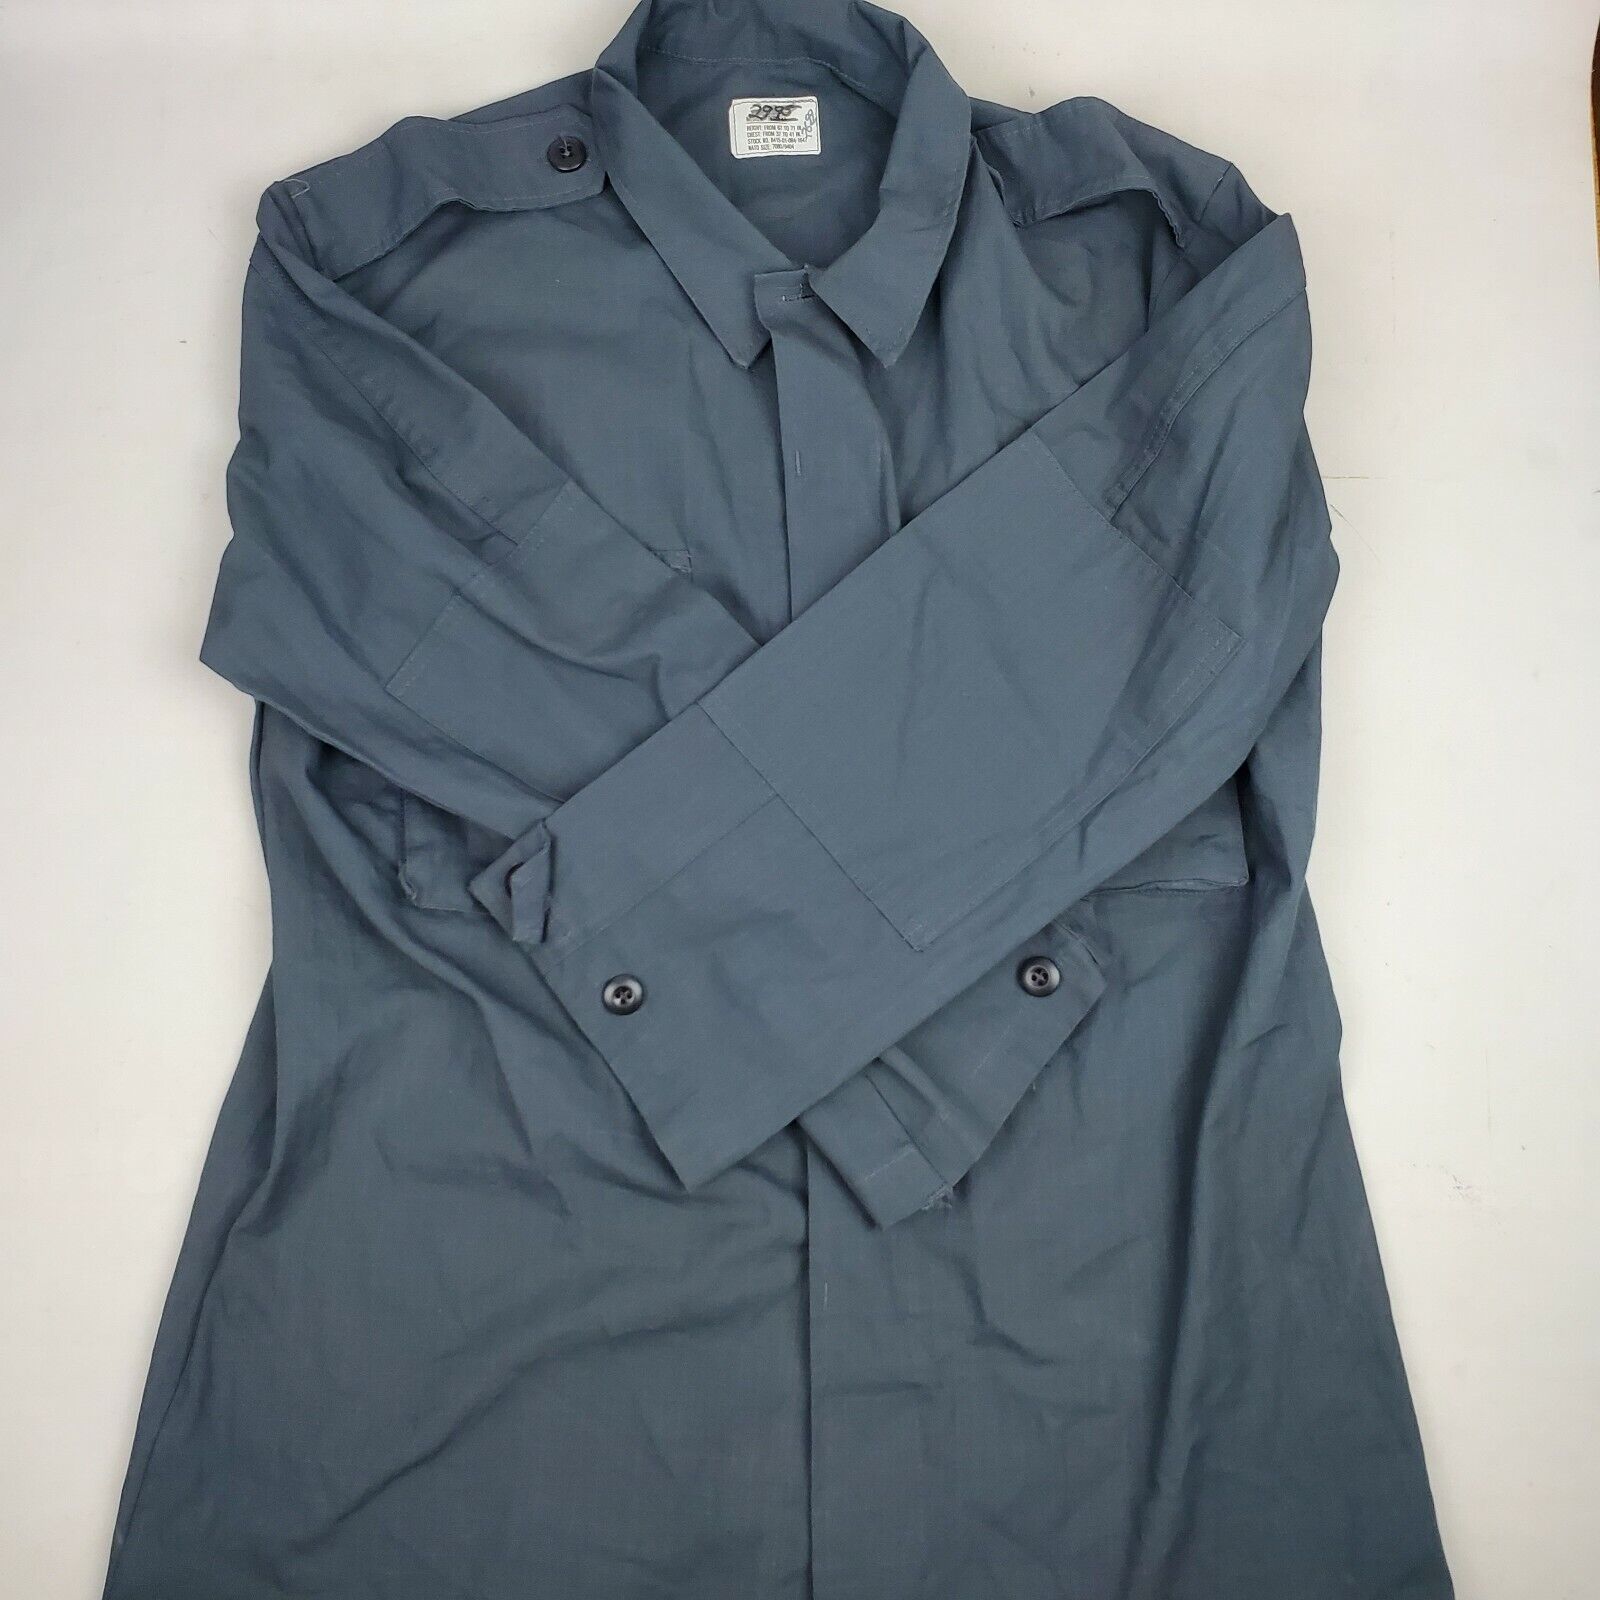 NWOT Military Tactical Shirt Grey Combat Coat Sz Medium Regular Long Sleeve USA Без бренда